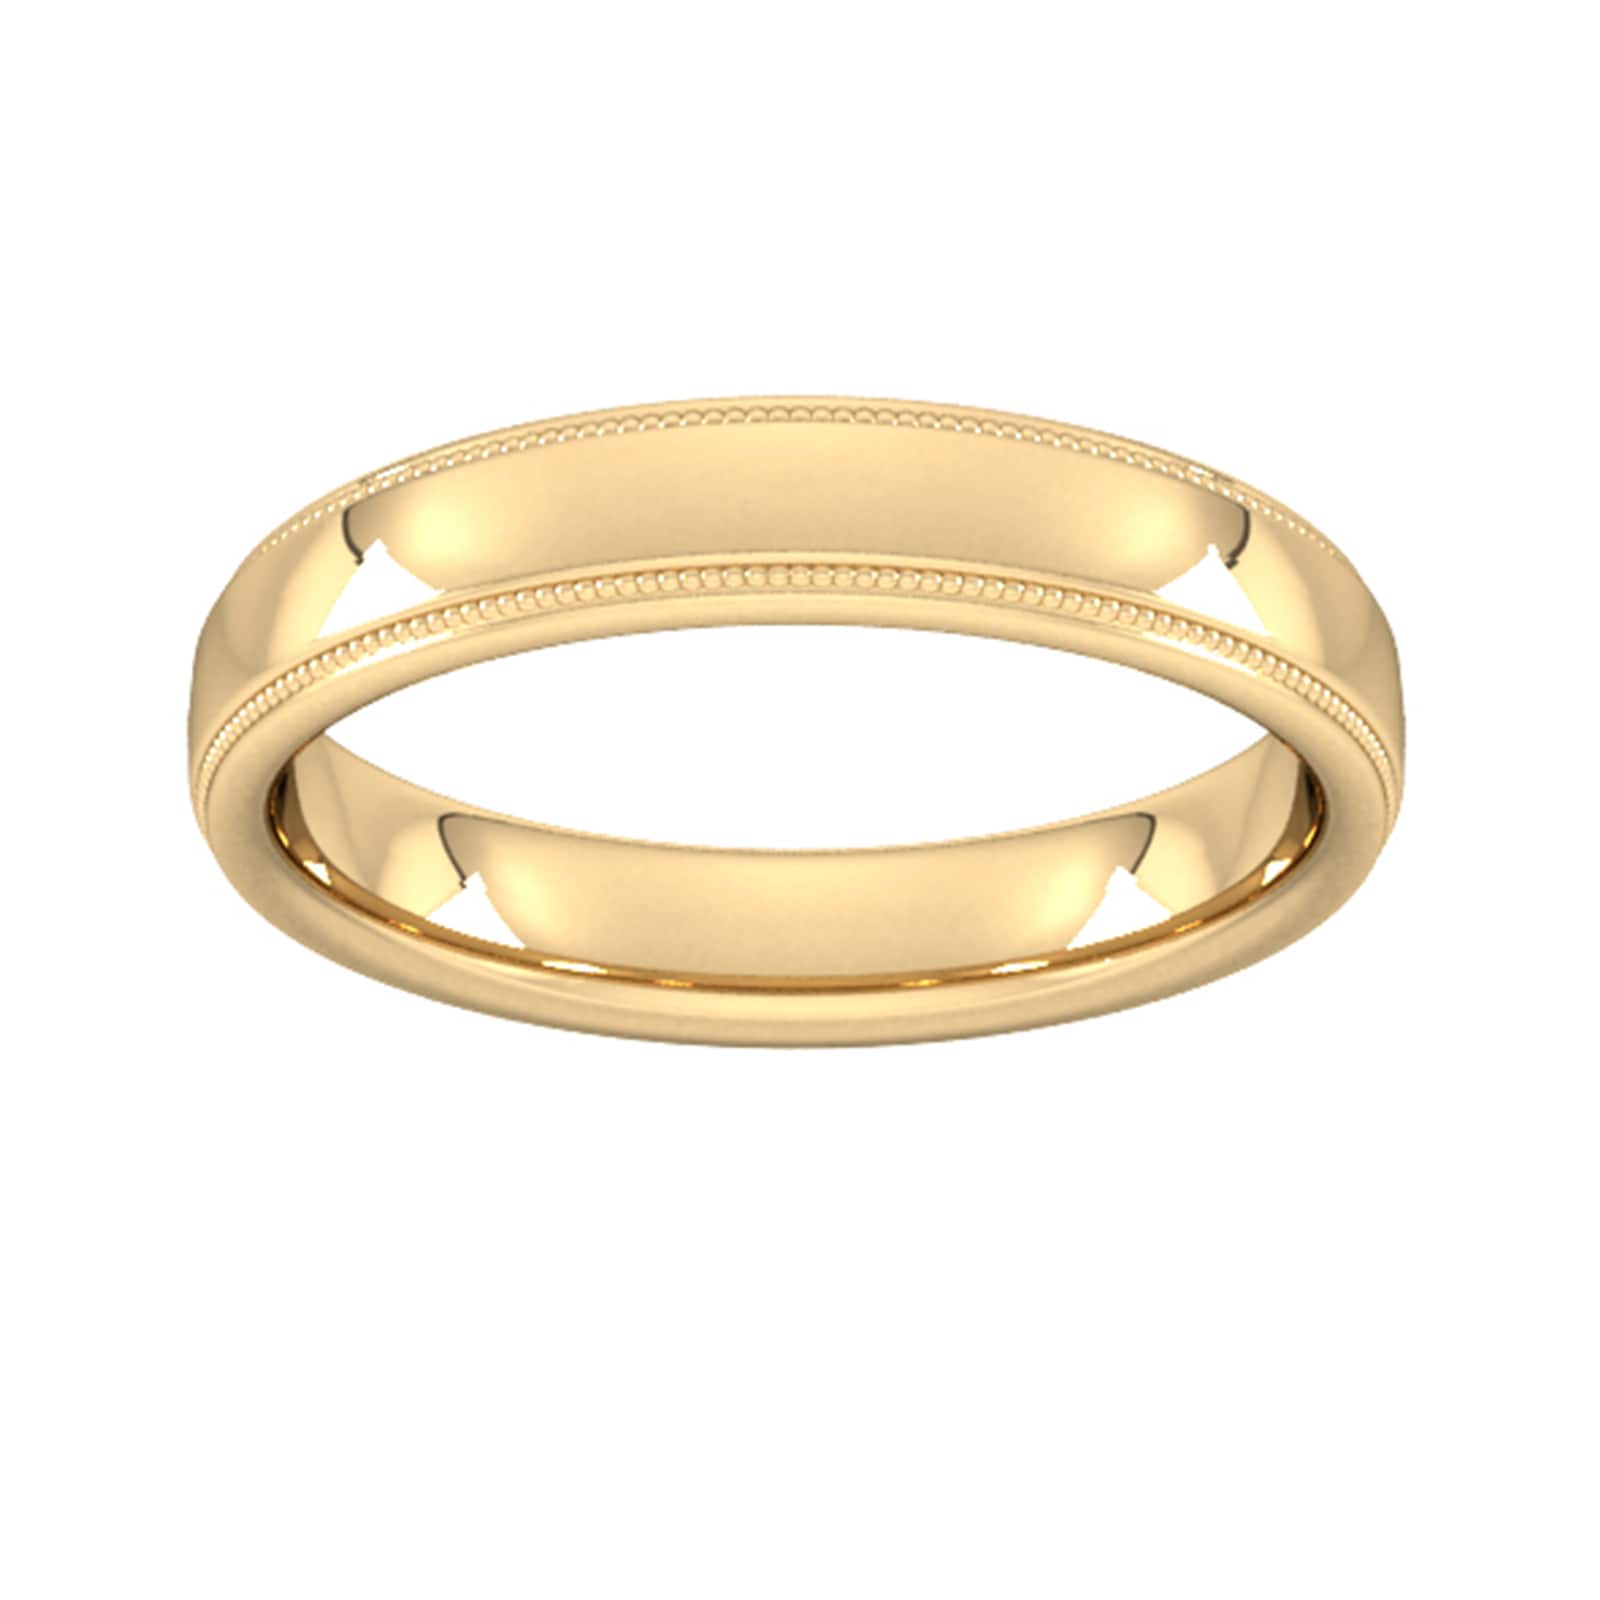 4mm D Shape Heavy Milgrain Edge Wedding Ring In 18 Carat Yellow Gold - Ring Size O